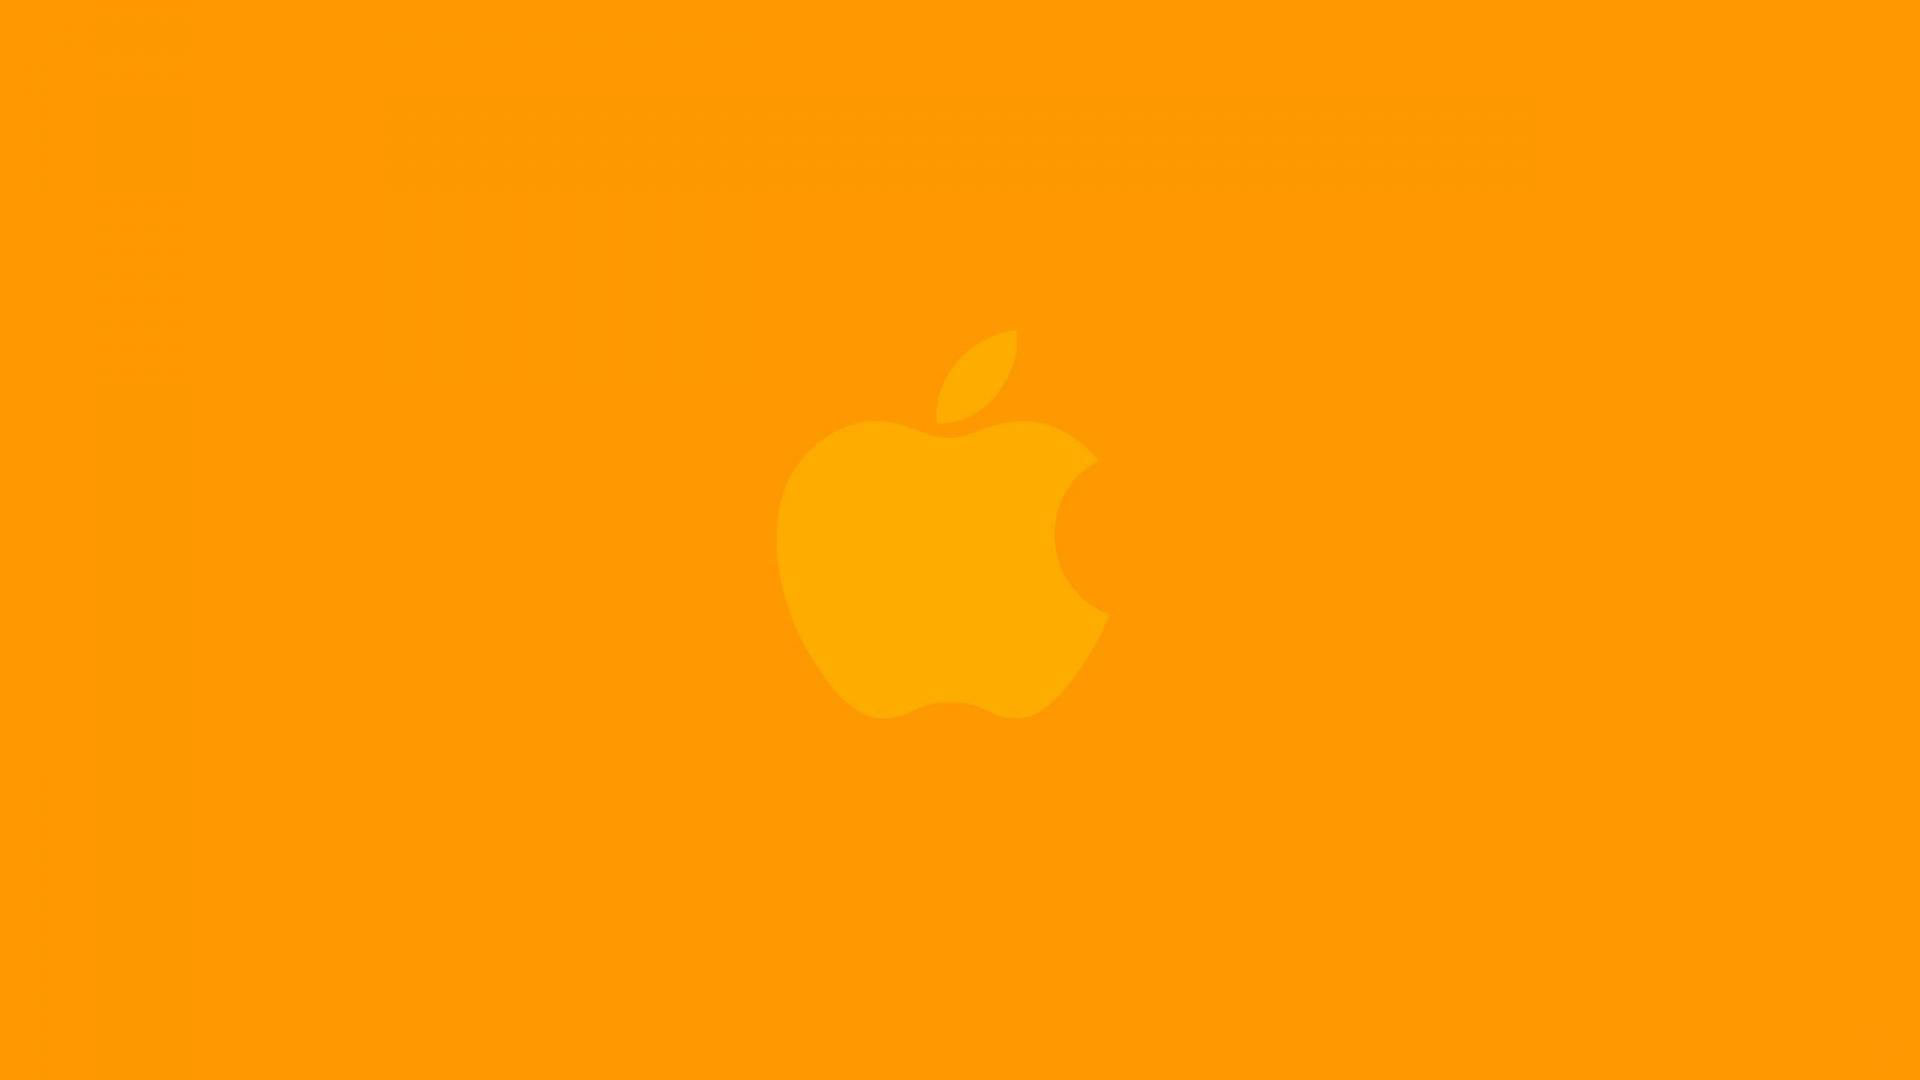 Hd pics photos orange cute apple logo best 2 desktop background wallpaper